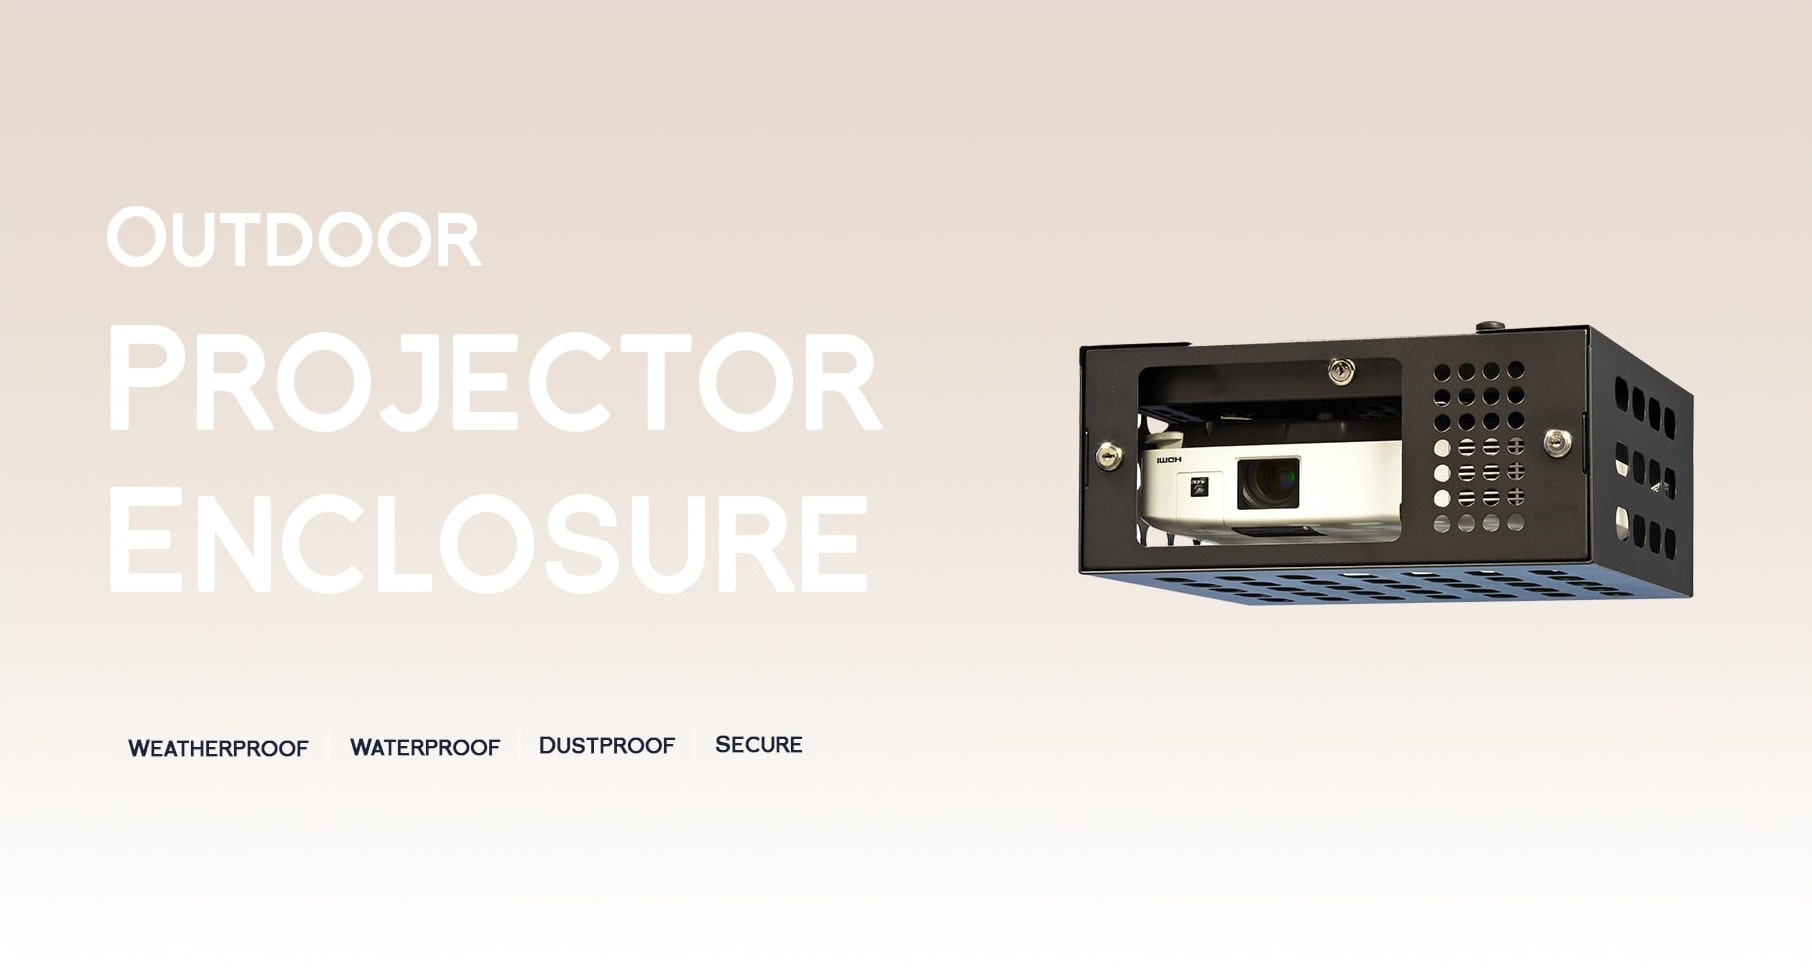 Best Outdoor Projector Enclosure - Weatherproof, Waterproof, Dustproof & Secure - Complete Guide